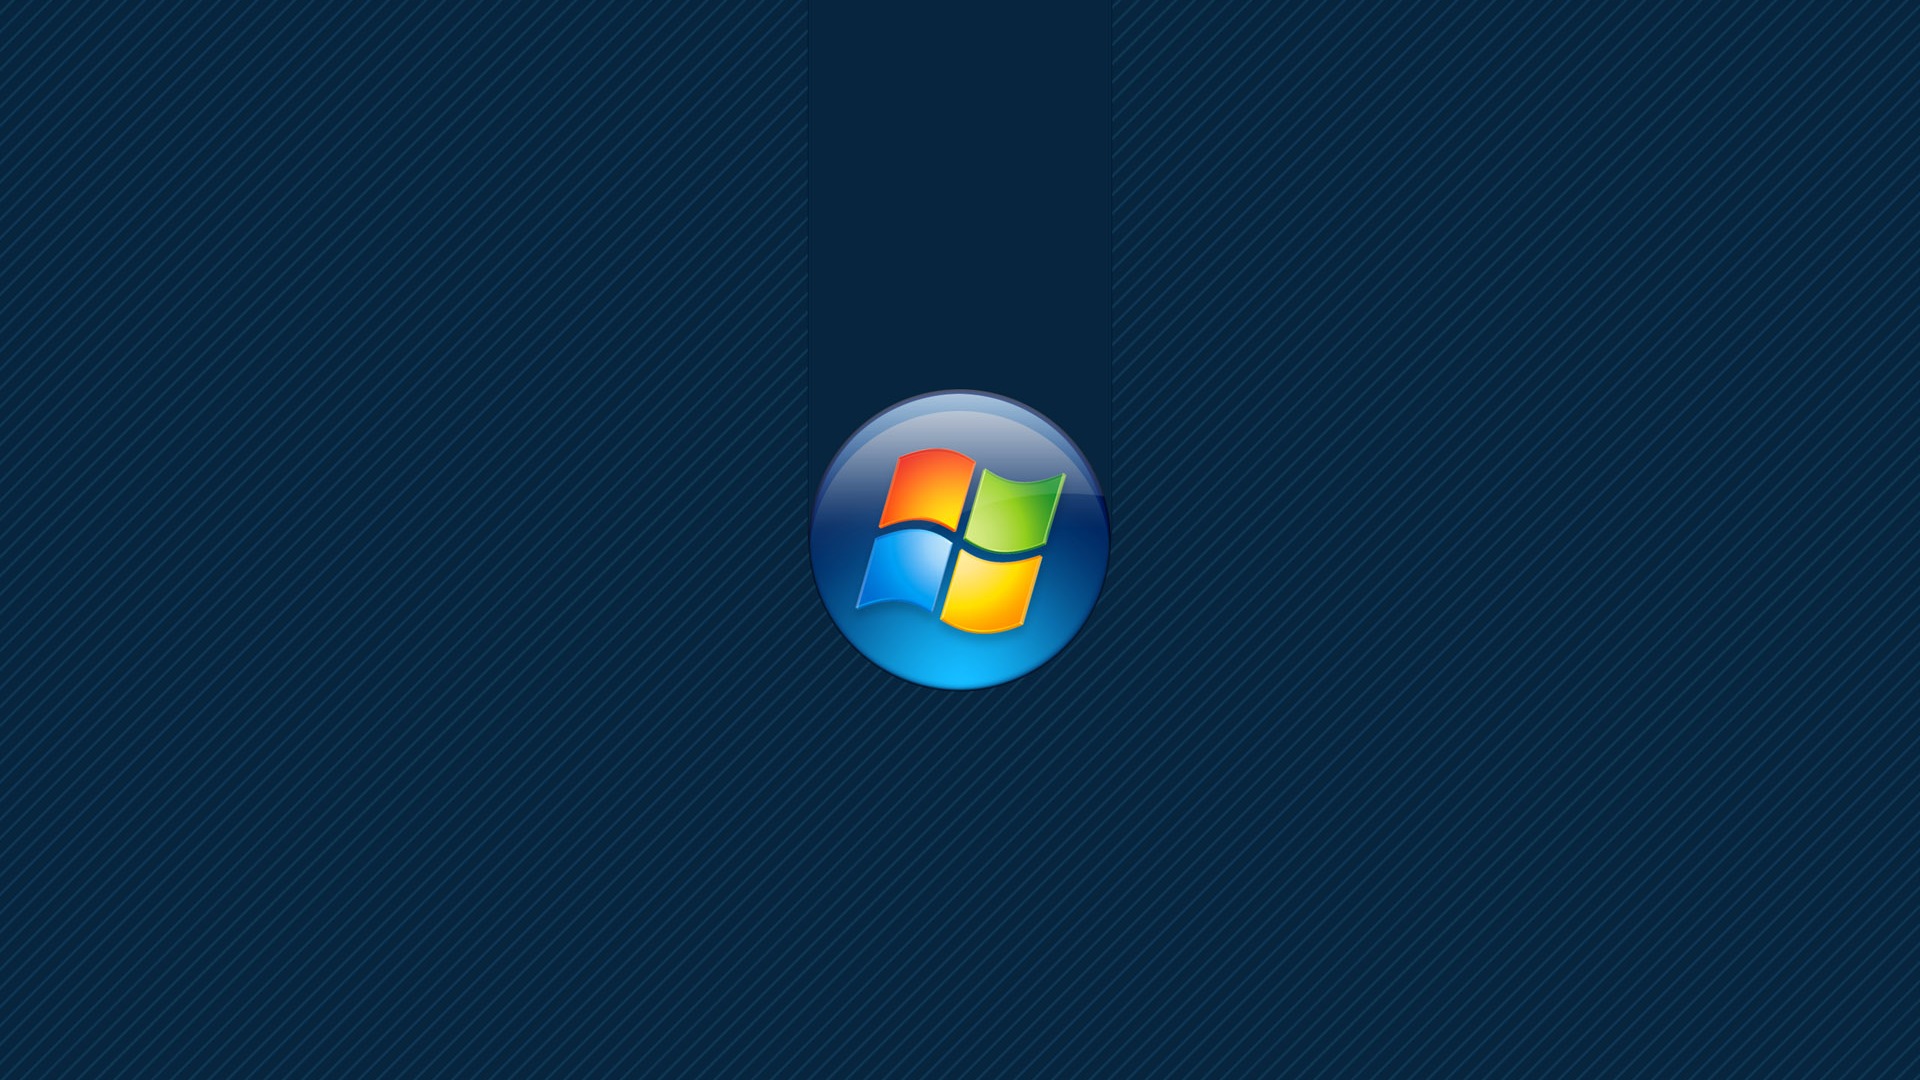 Download Windows logo wallpaper 1920x1080